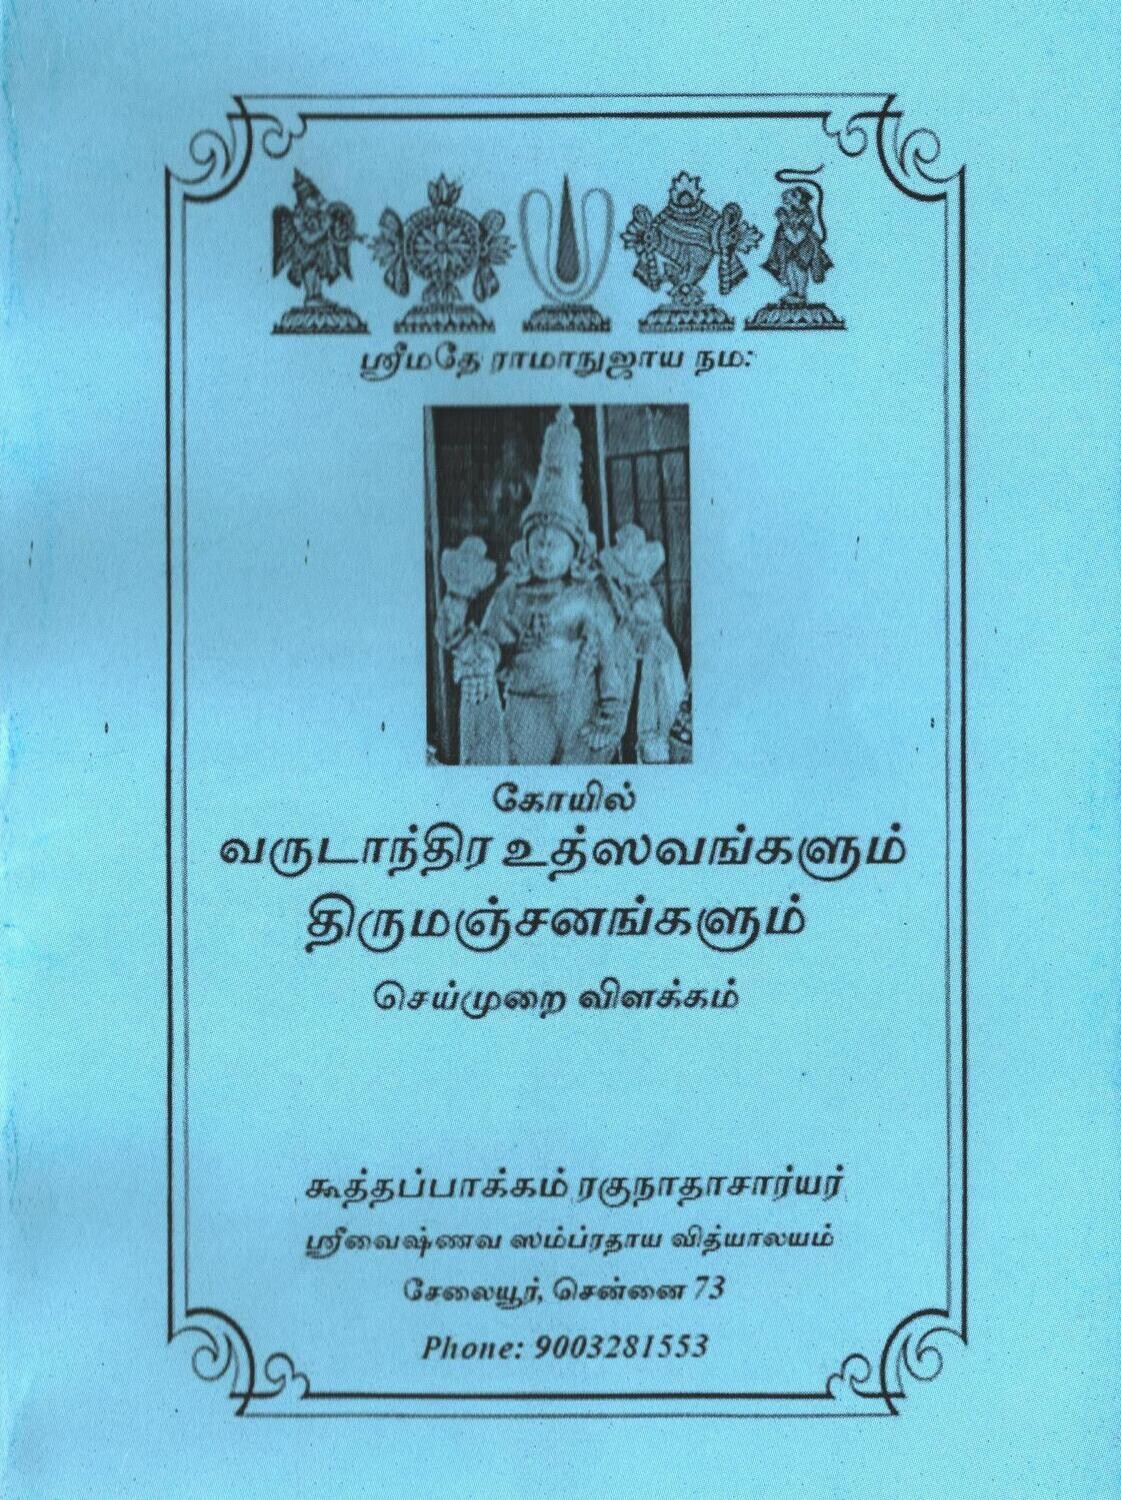 Printed Book - Koil / Koyil varudanthira (Yearly Festivals) Utsavam Tirumanjanam, கோயில் வருடாந்திர உத்ஸவங்களும் திருமஞ்சனங்களும்.